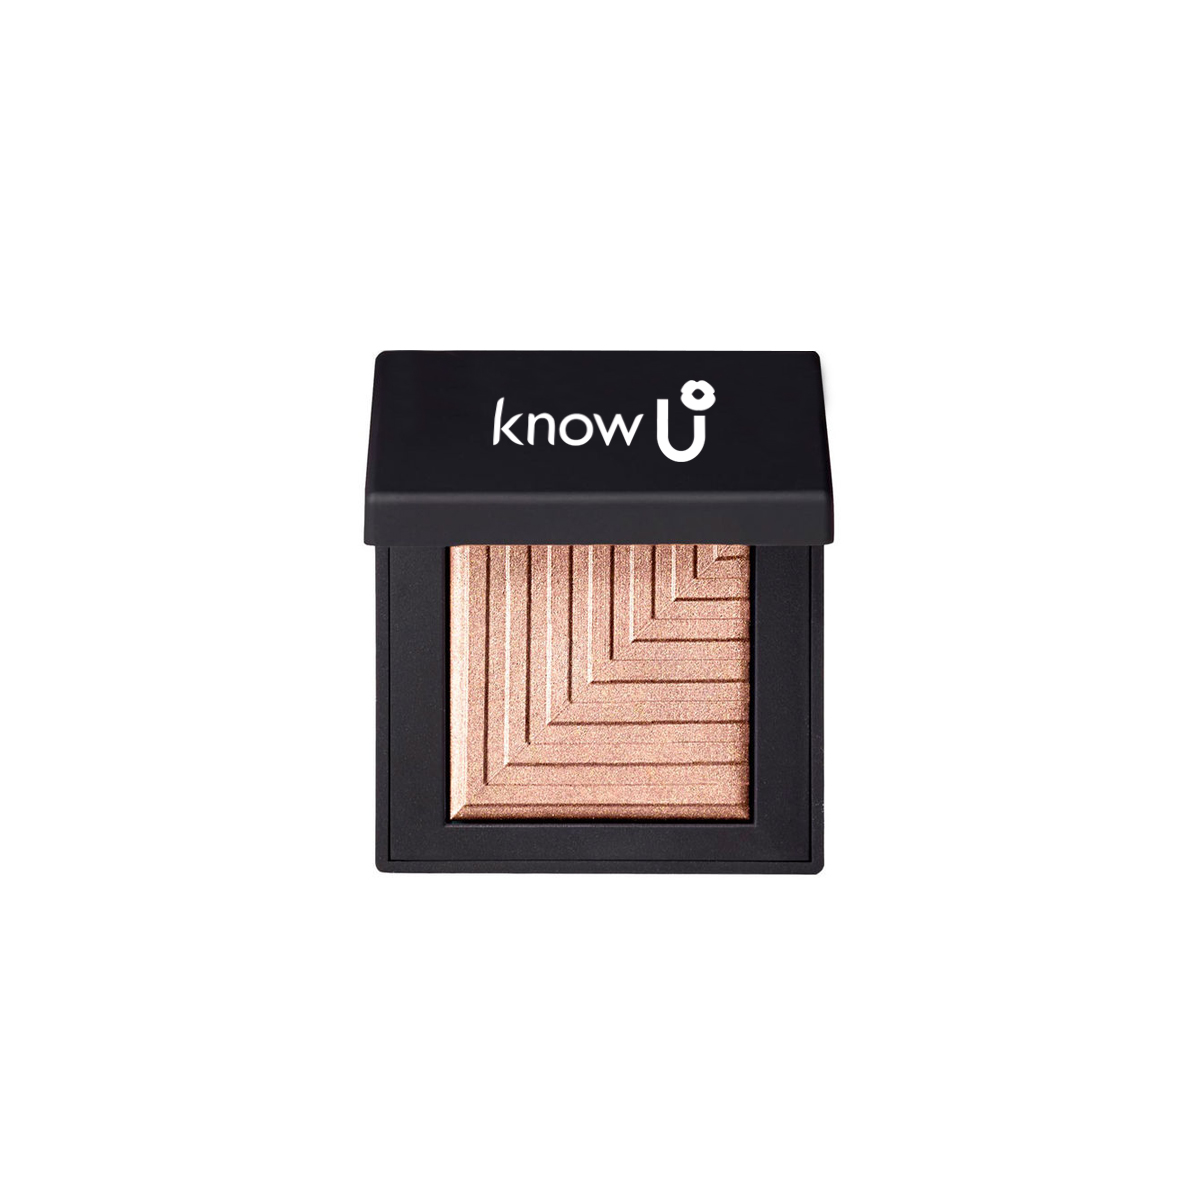 Know U Cosmetics Eyeshadow 18002